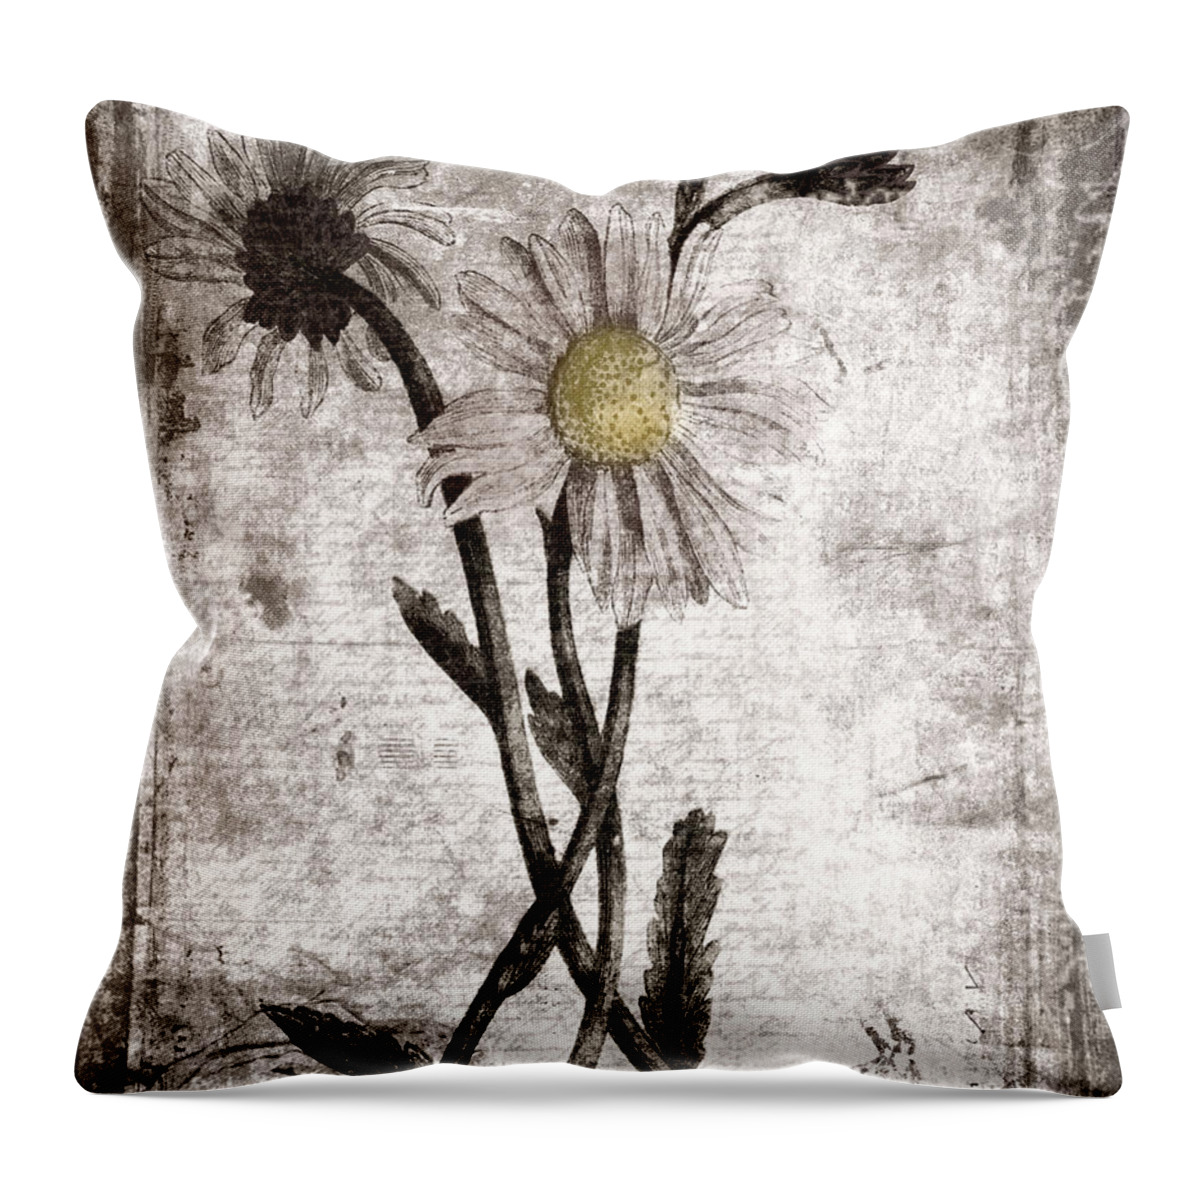 Digital Collage Throw Pillow featuring the digital art Yesterday's Garden II by Bonnie Bruno